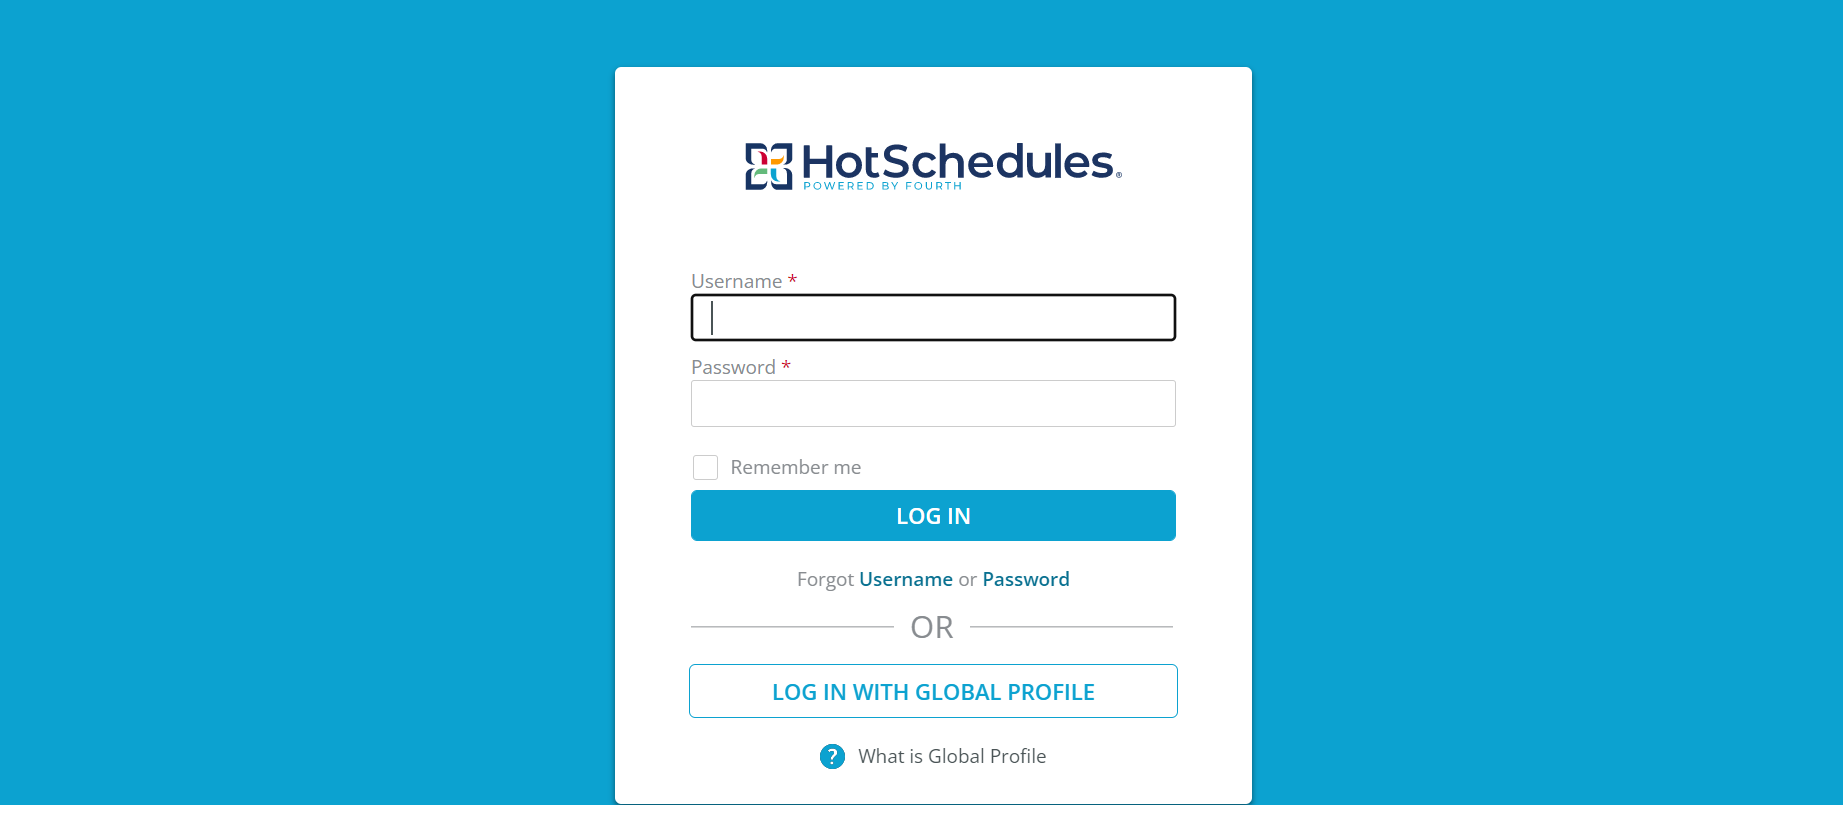 HotSchedules login